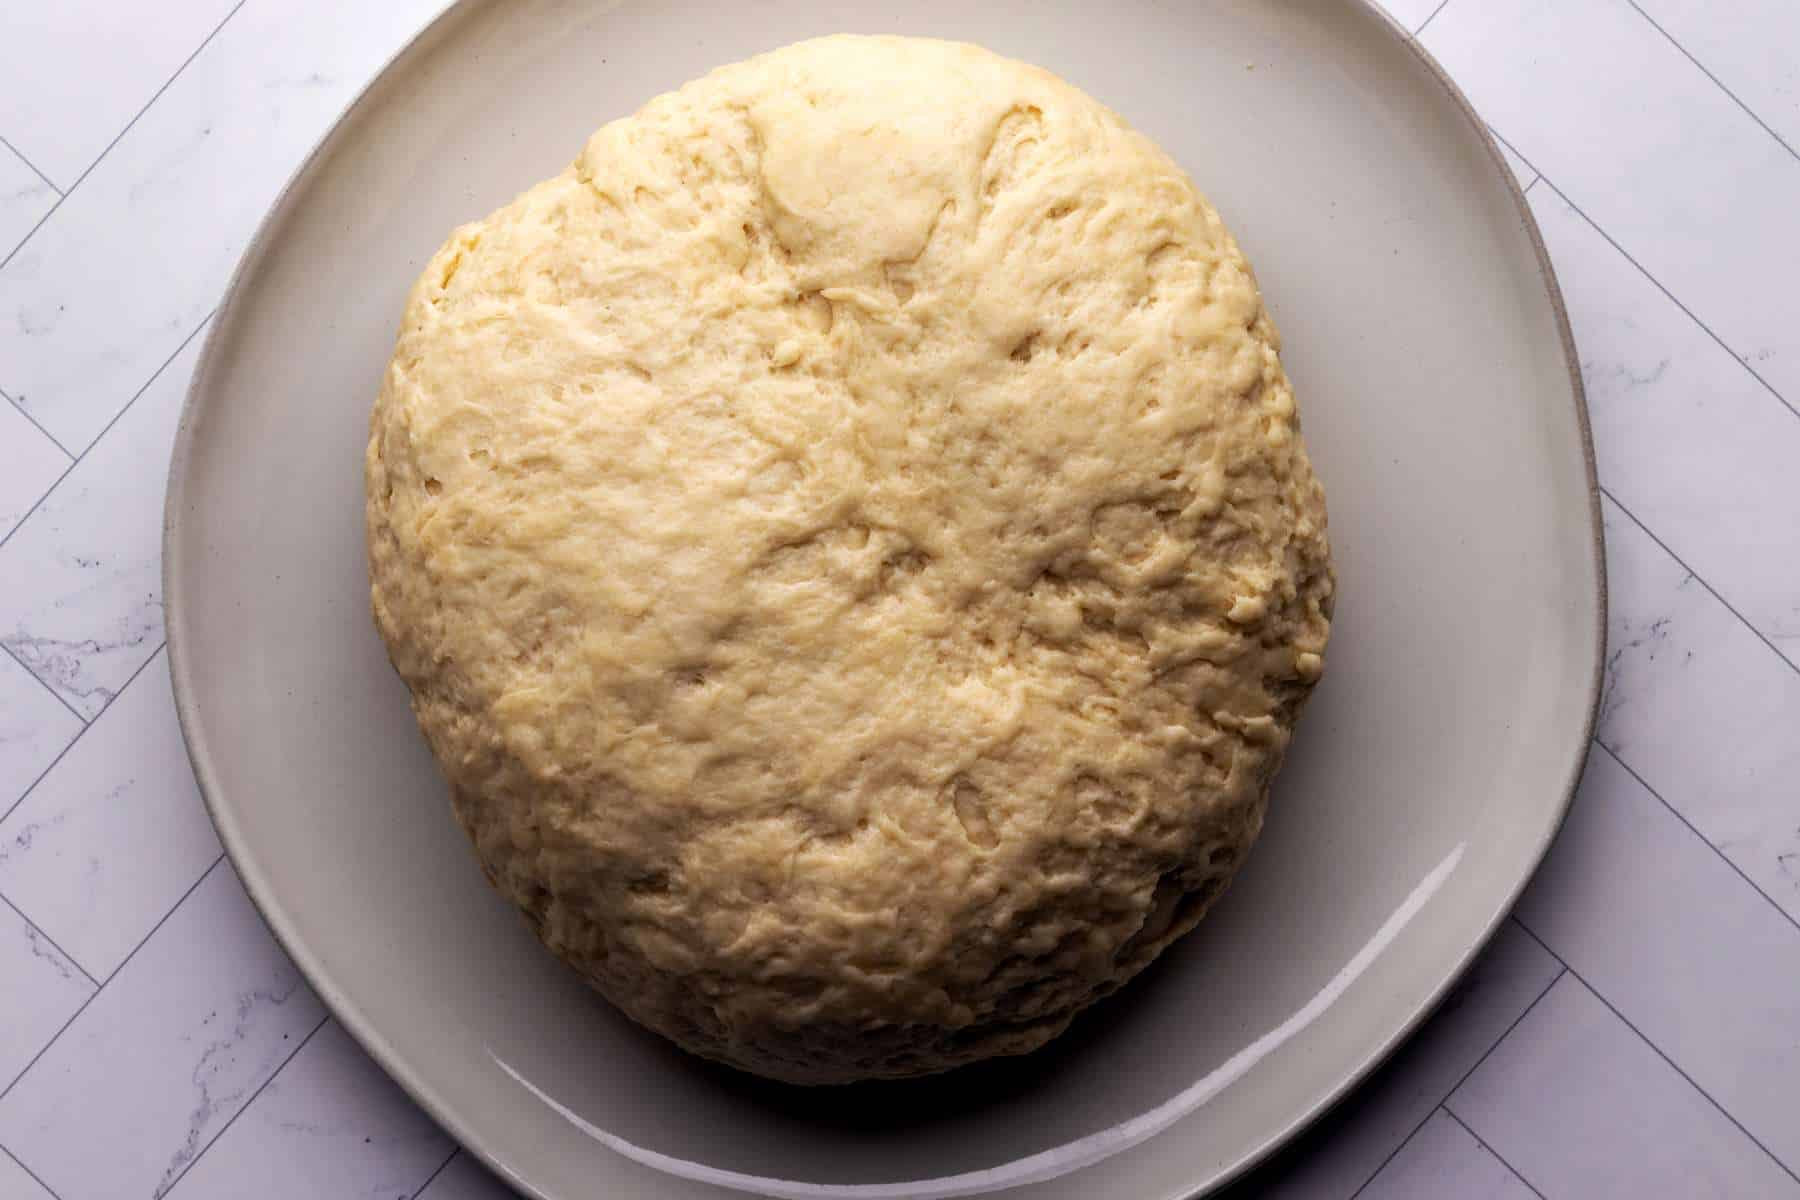 Easy yeast rolls dough.